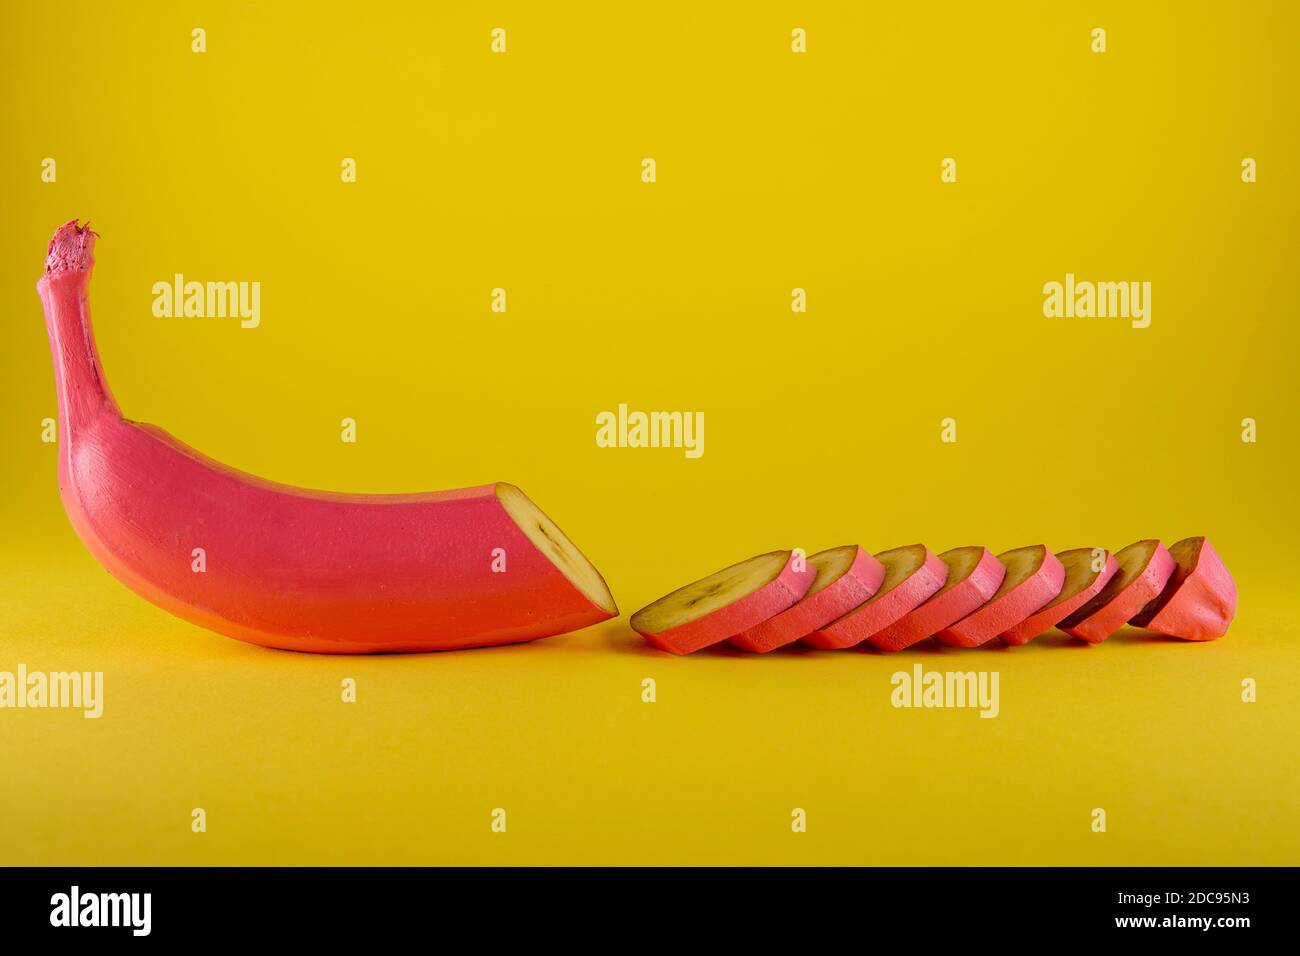 Pink banana on yellow background. Minimal food concept Stock Photo